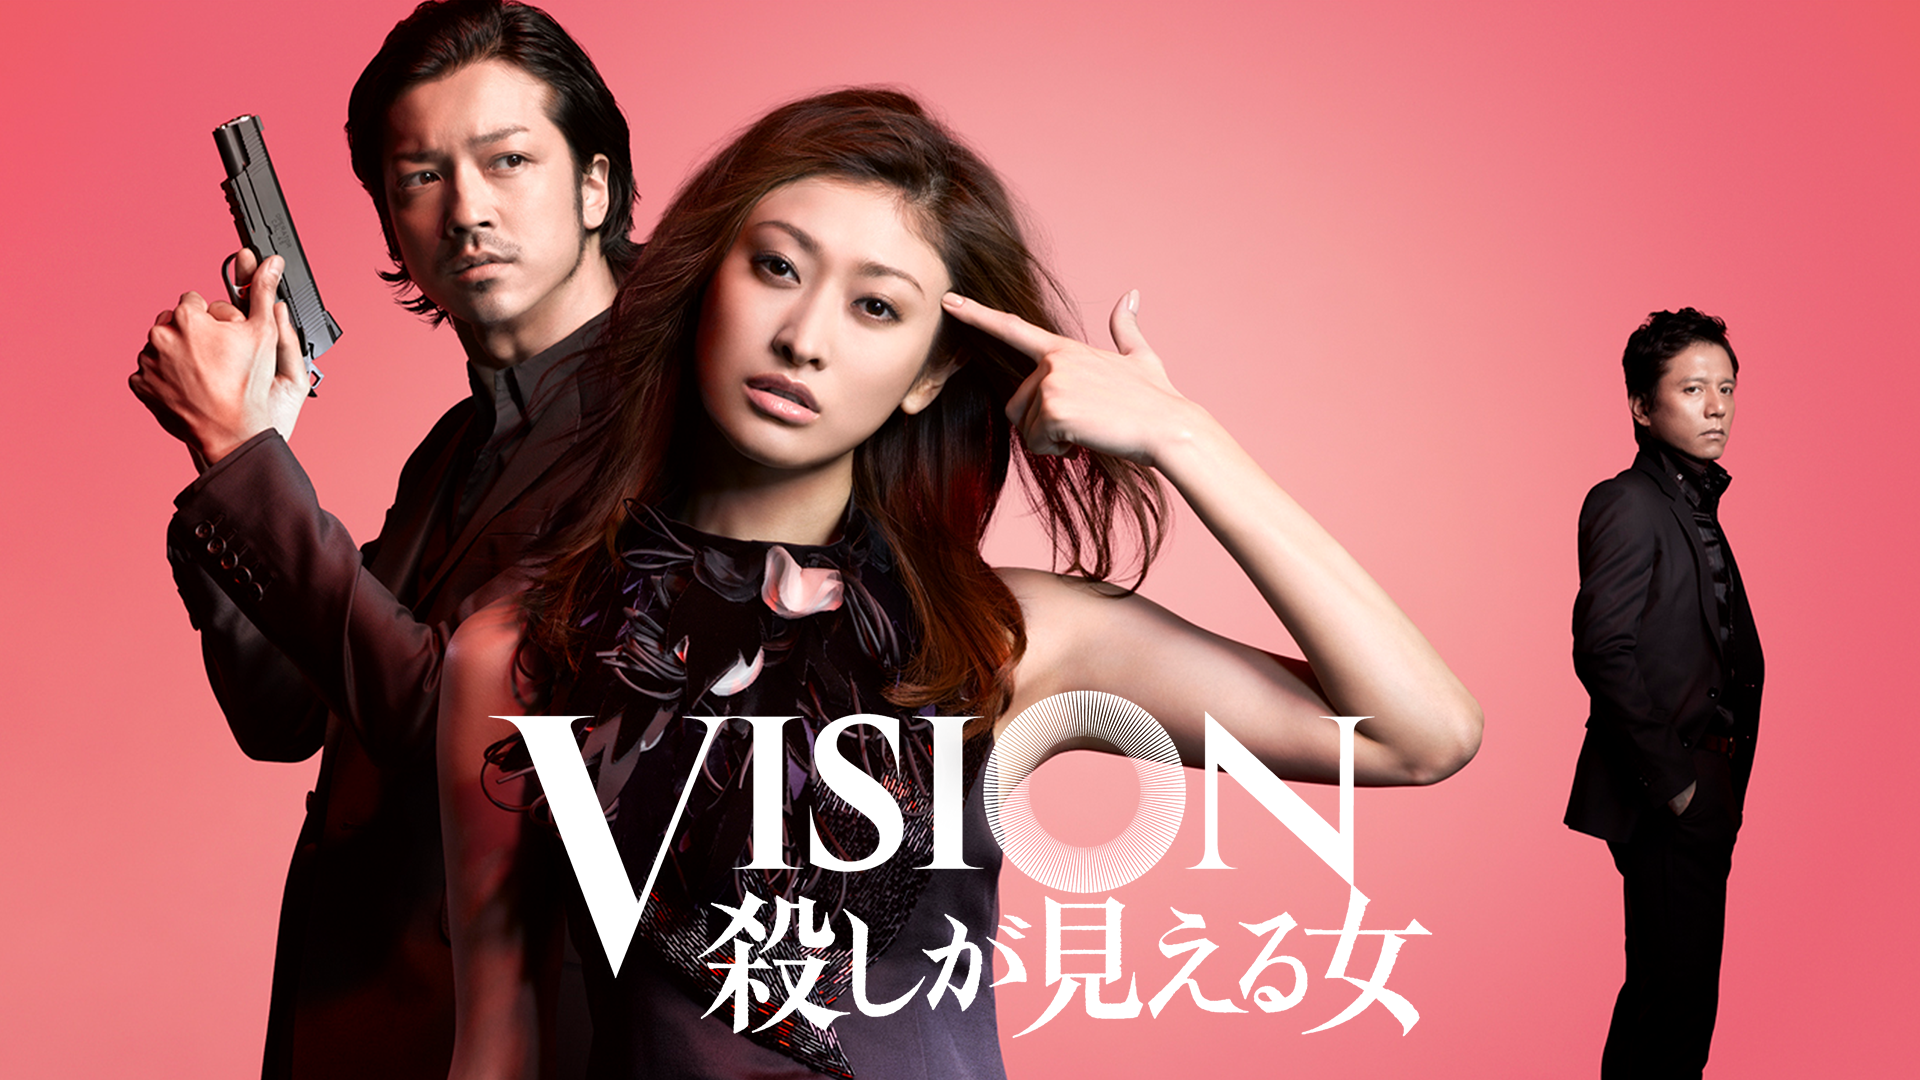 VISION 殺しが見える女(国内ドラマ / 2012) - 動画配信 | U-NEXT 31 